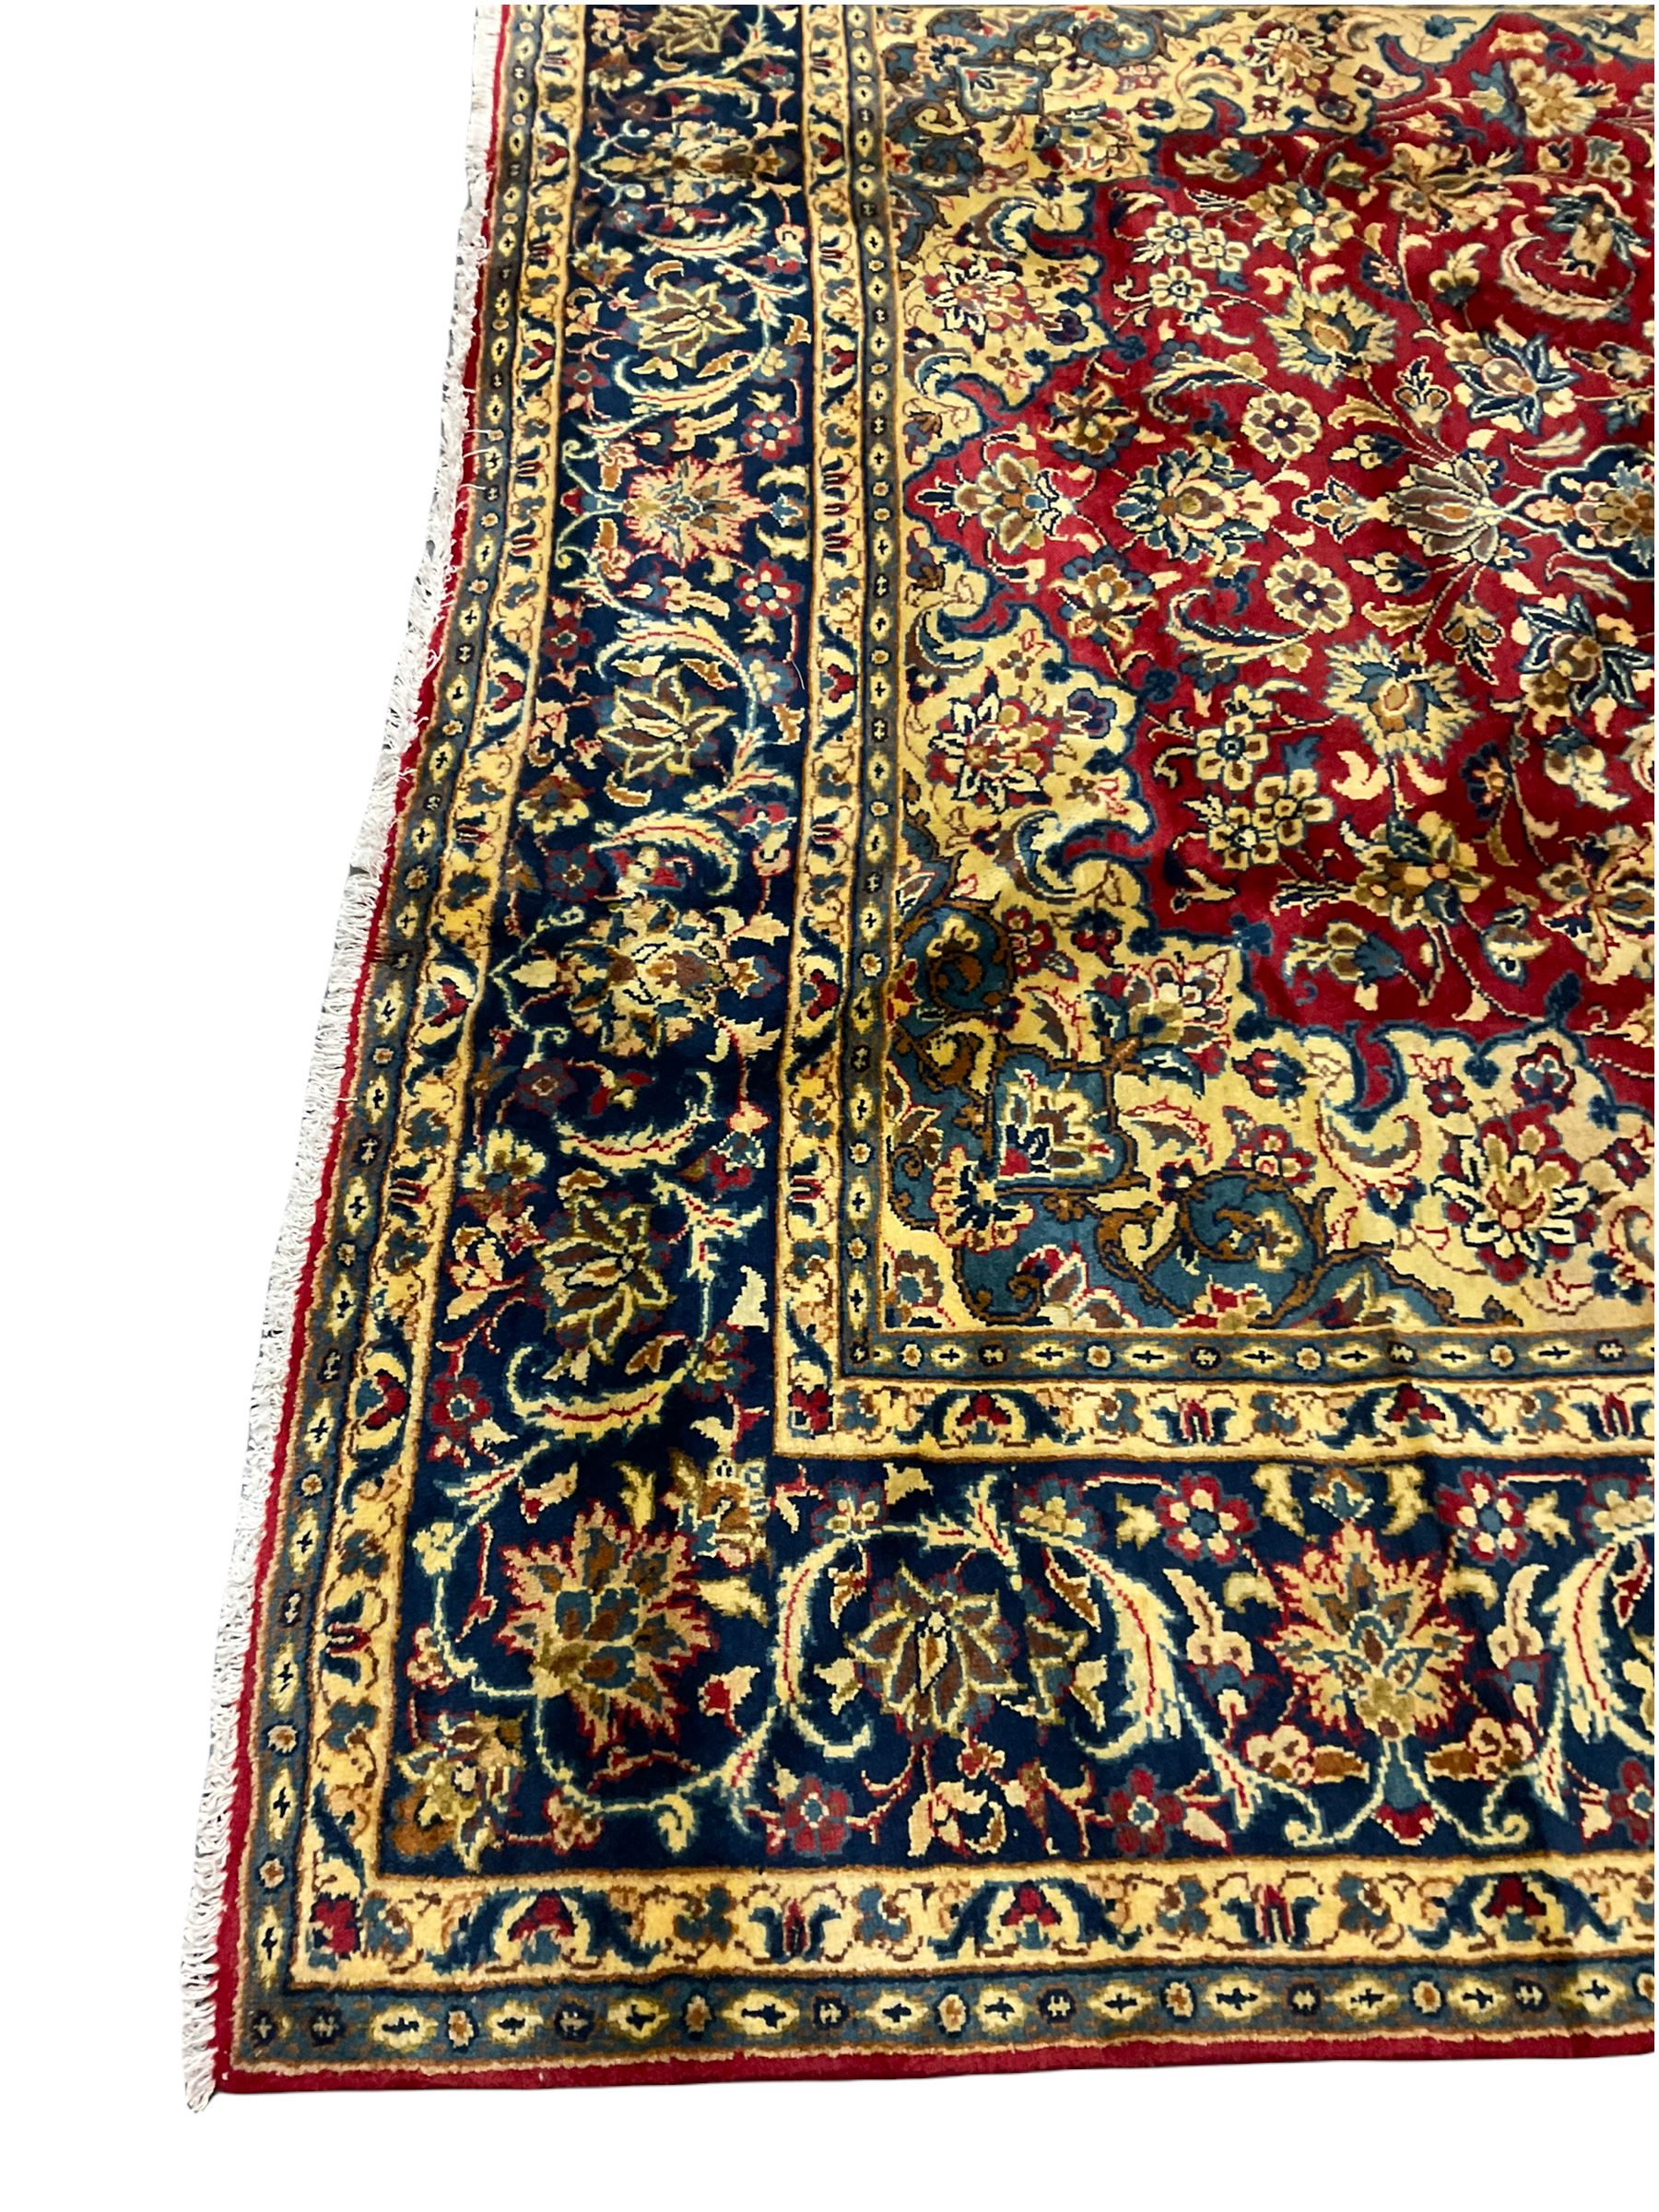 Persian Najafabad red ground carpet - Image 6 of 6